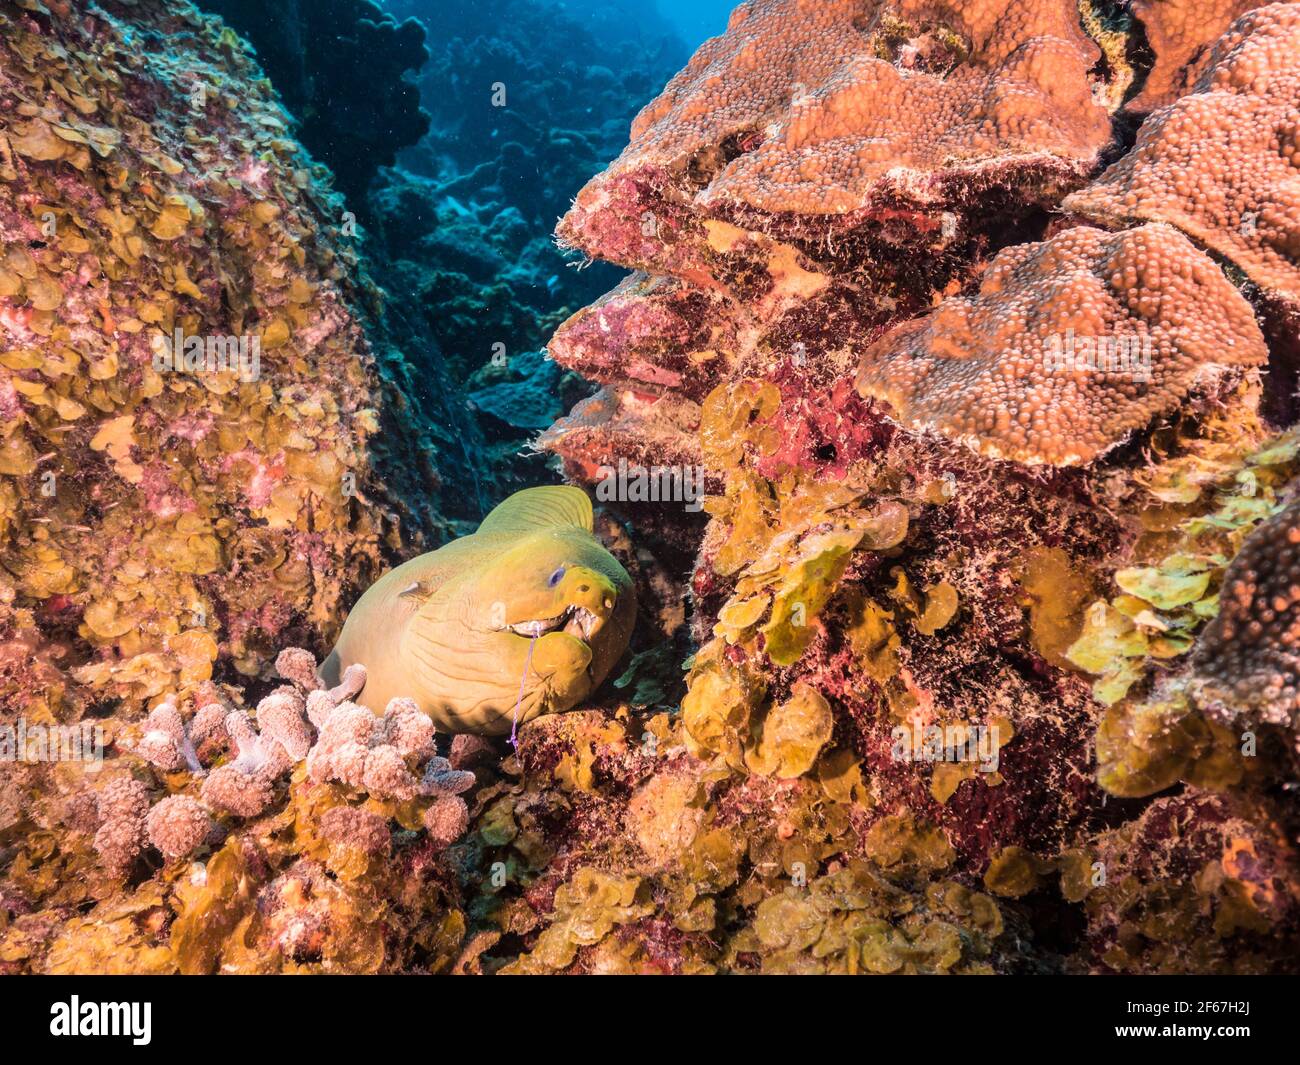 Pesca submarina fotografías e imágenes de alta resolución - Página 10 -  Alamy